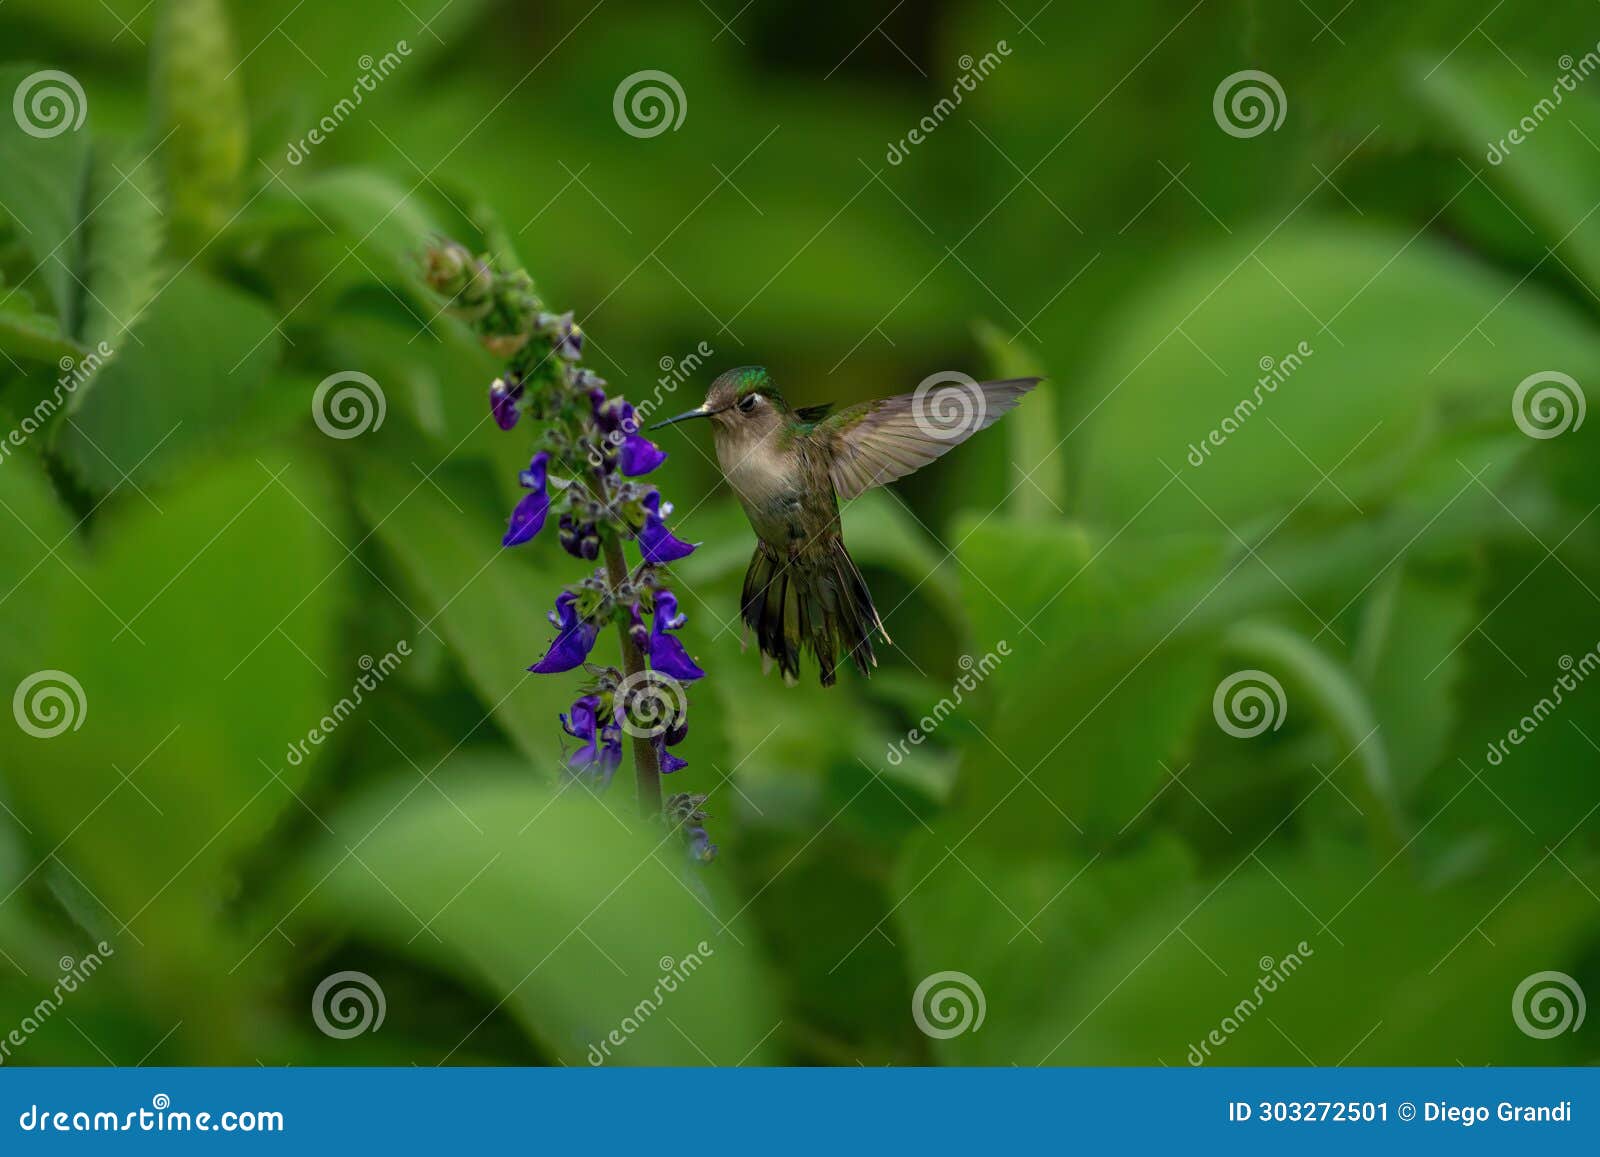 violet-capped woodnymph - female hummingbird